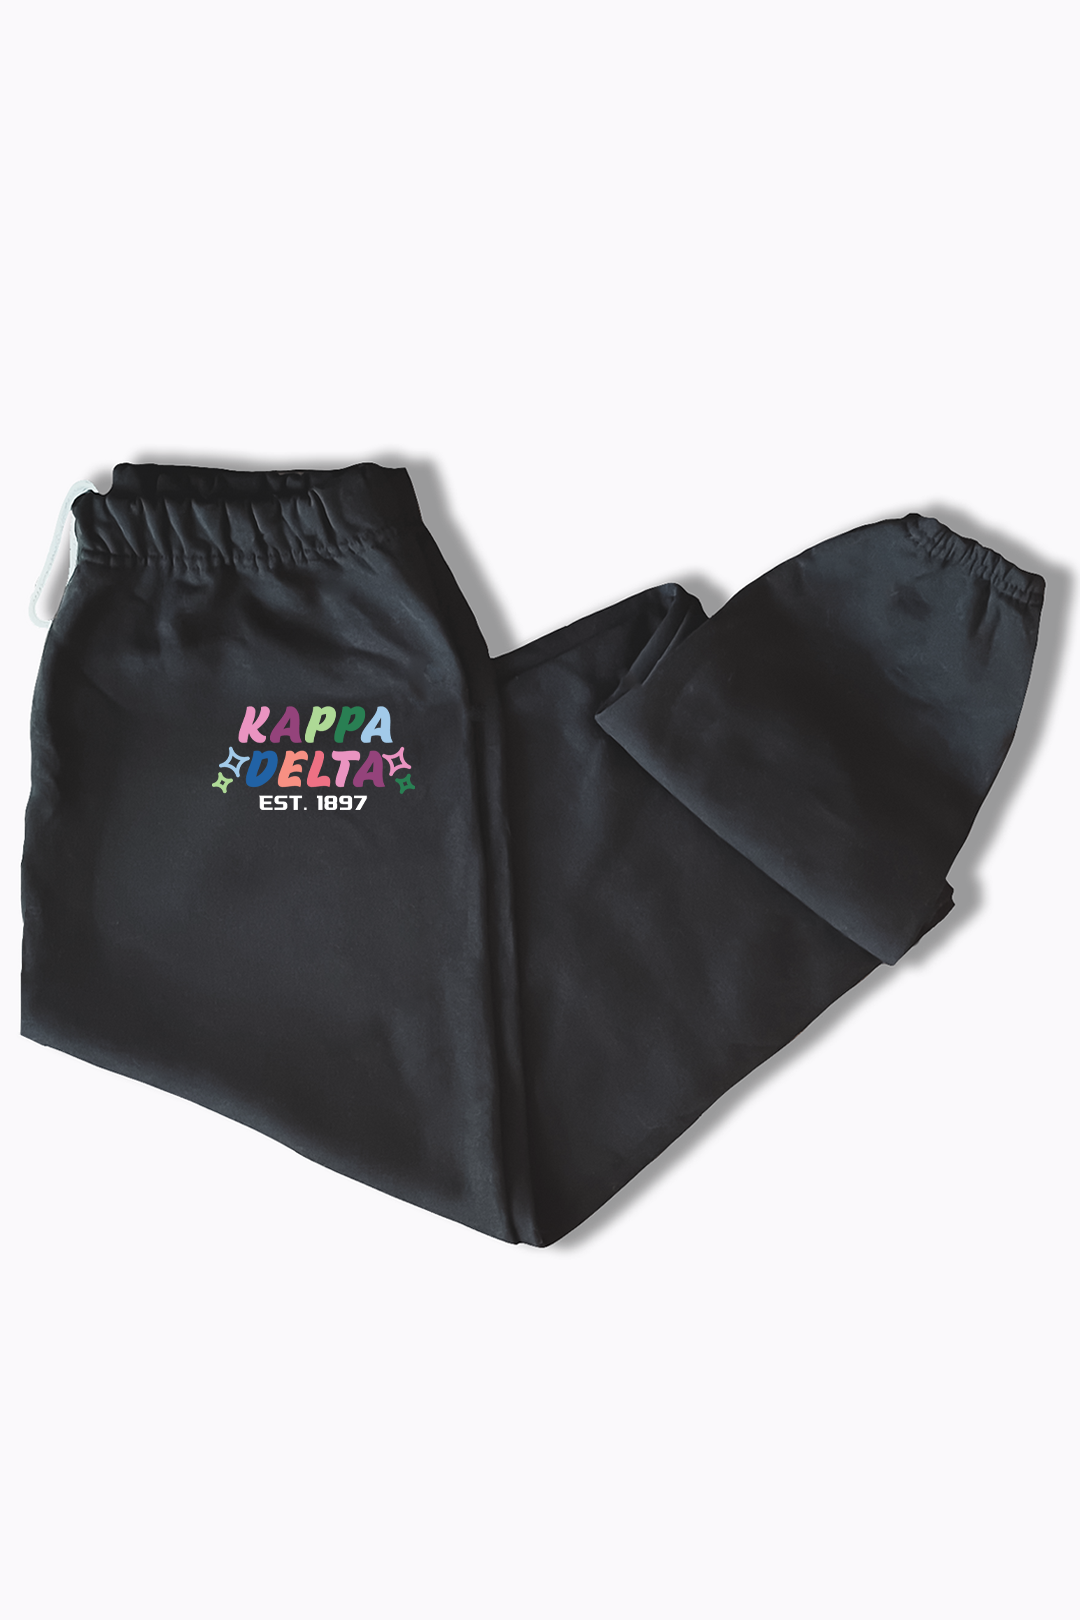 Black sweatpants - Kappa Delta